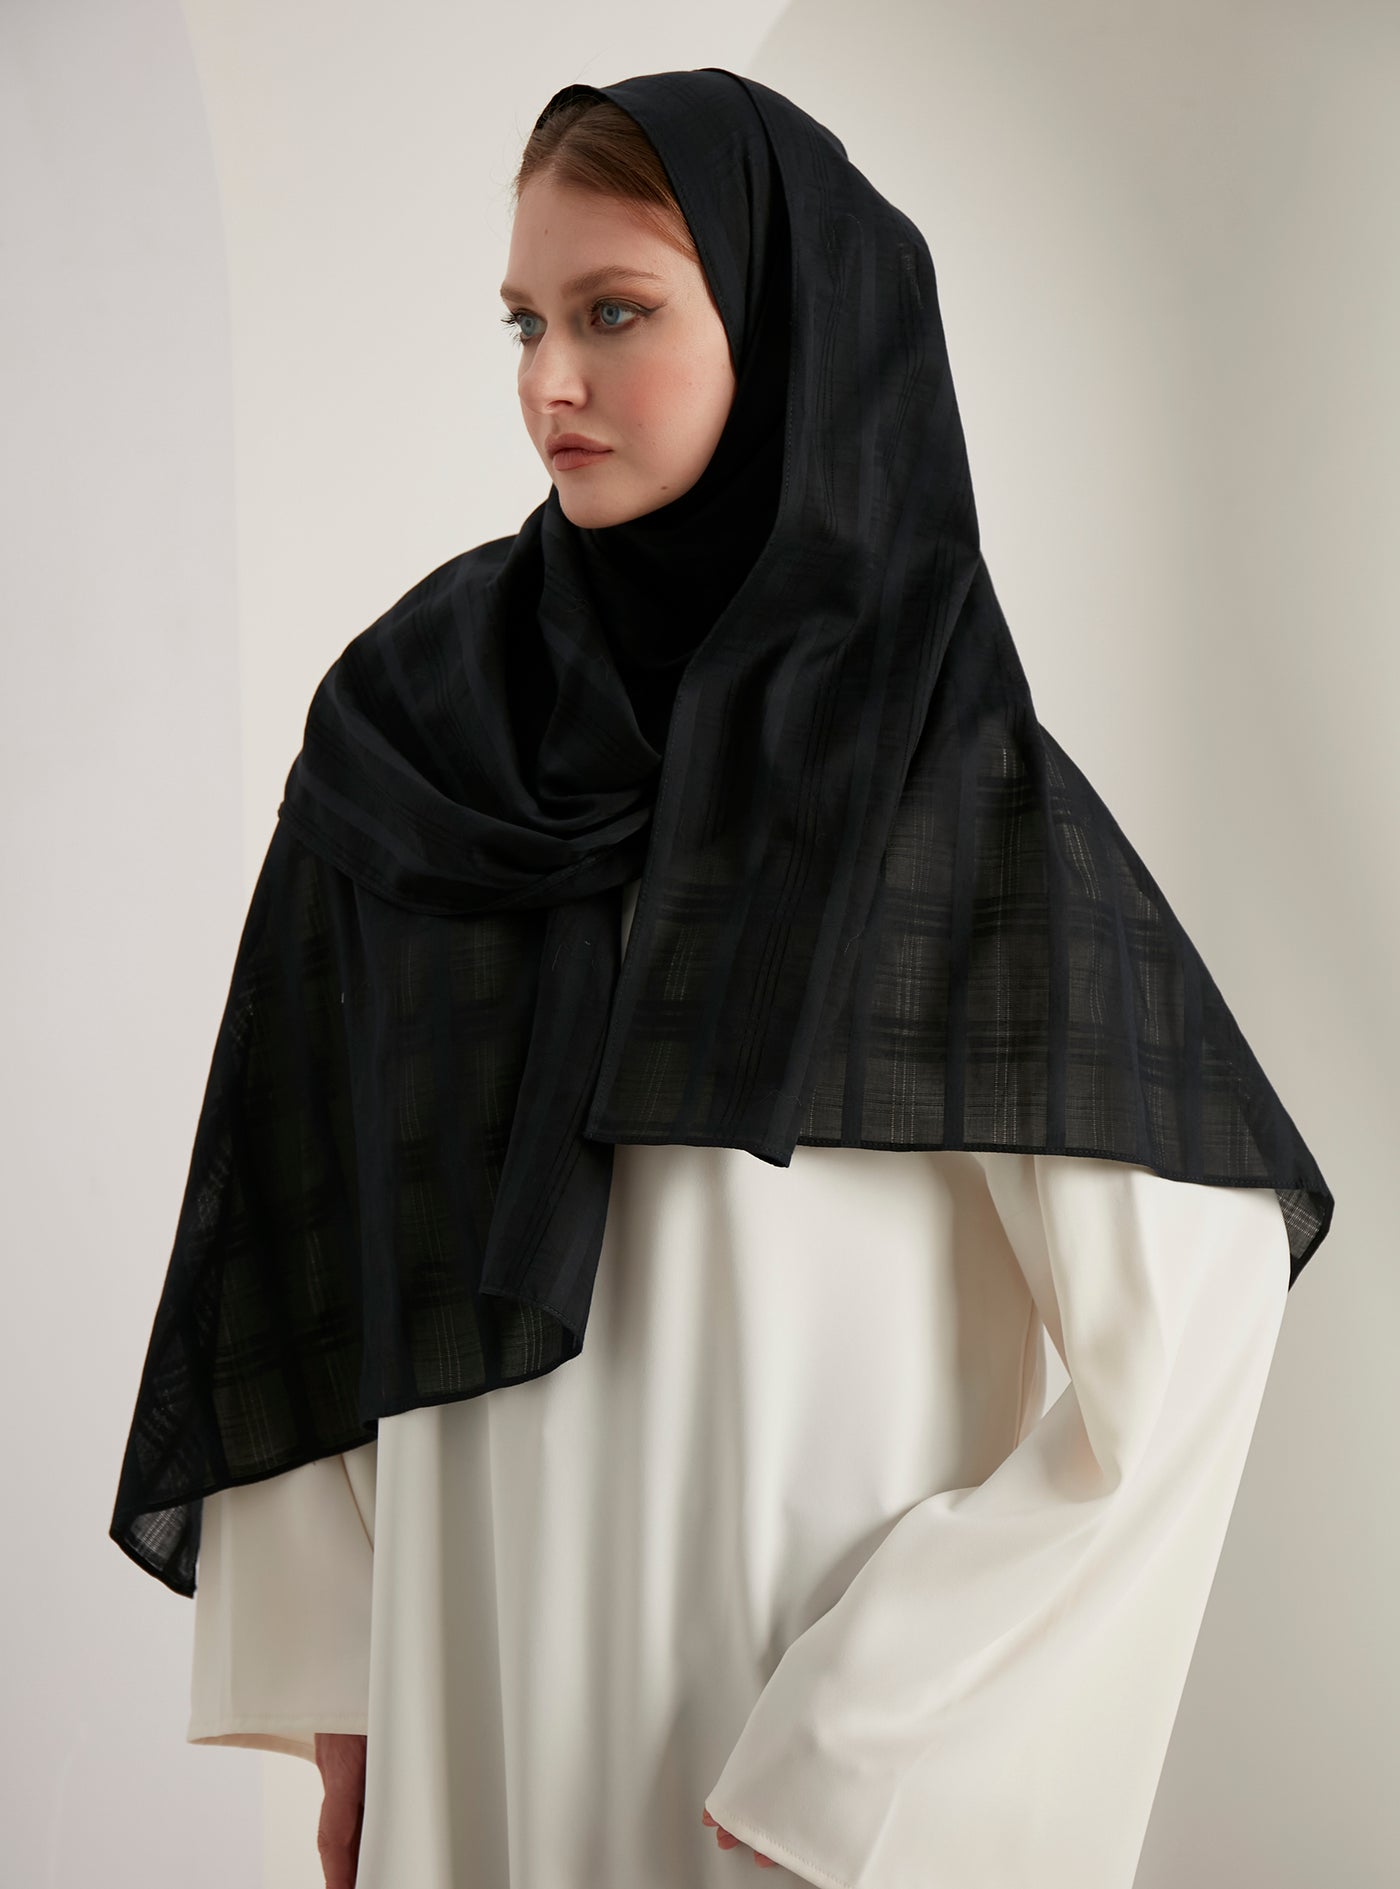 Cotton Black Scarves Hijab